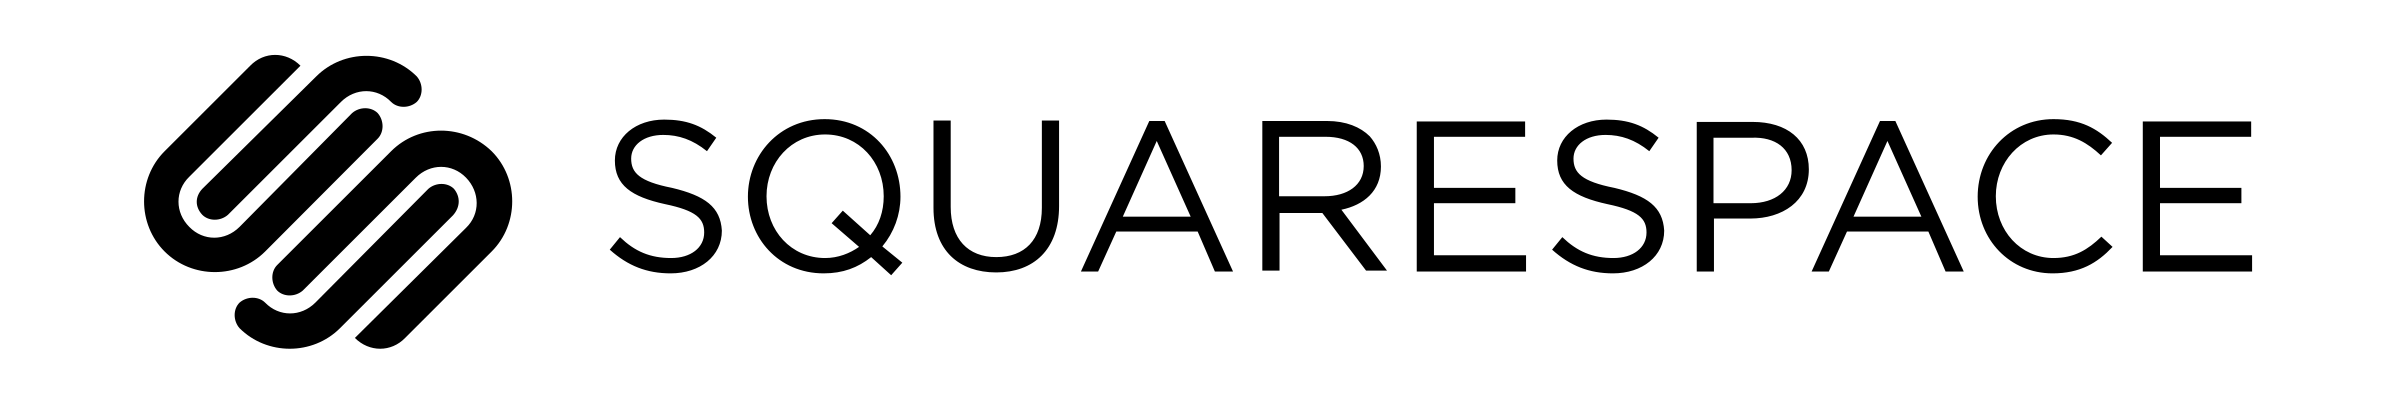 squarespace-logo-transparent.png